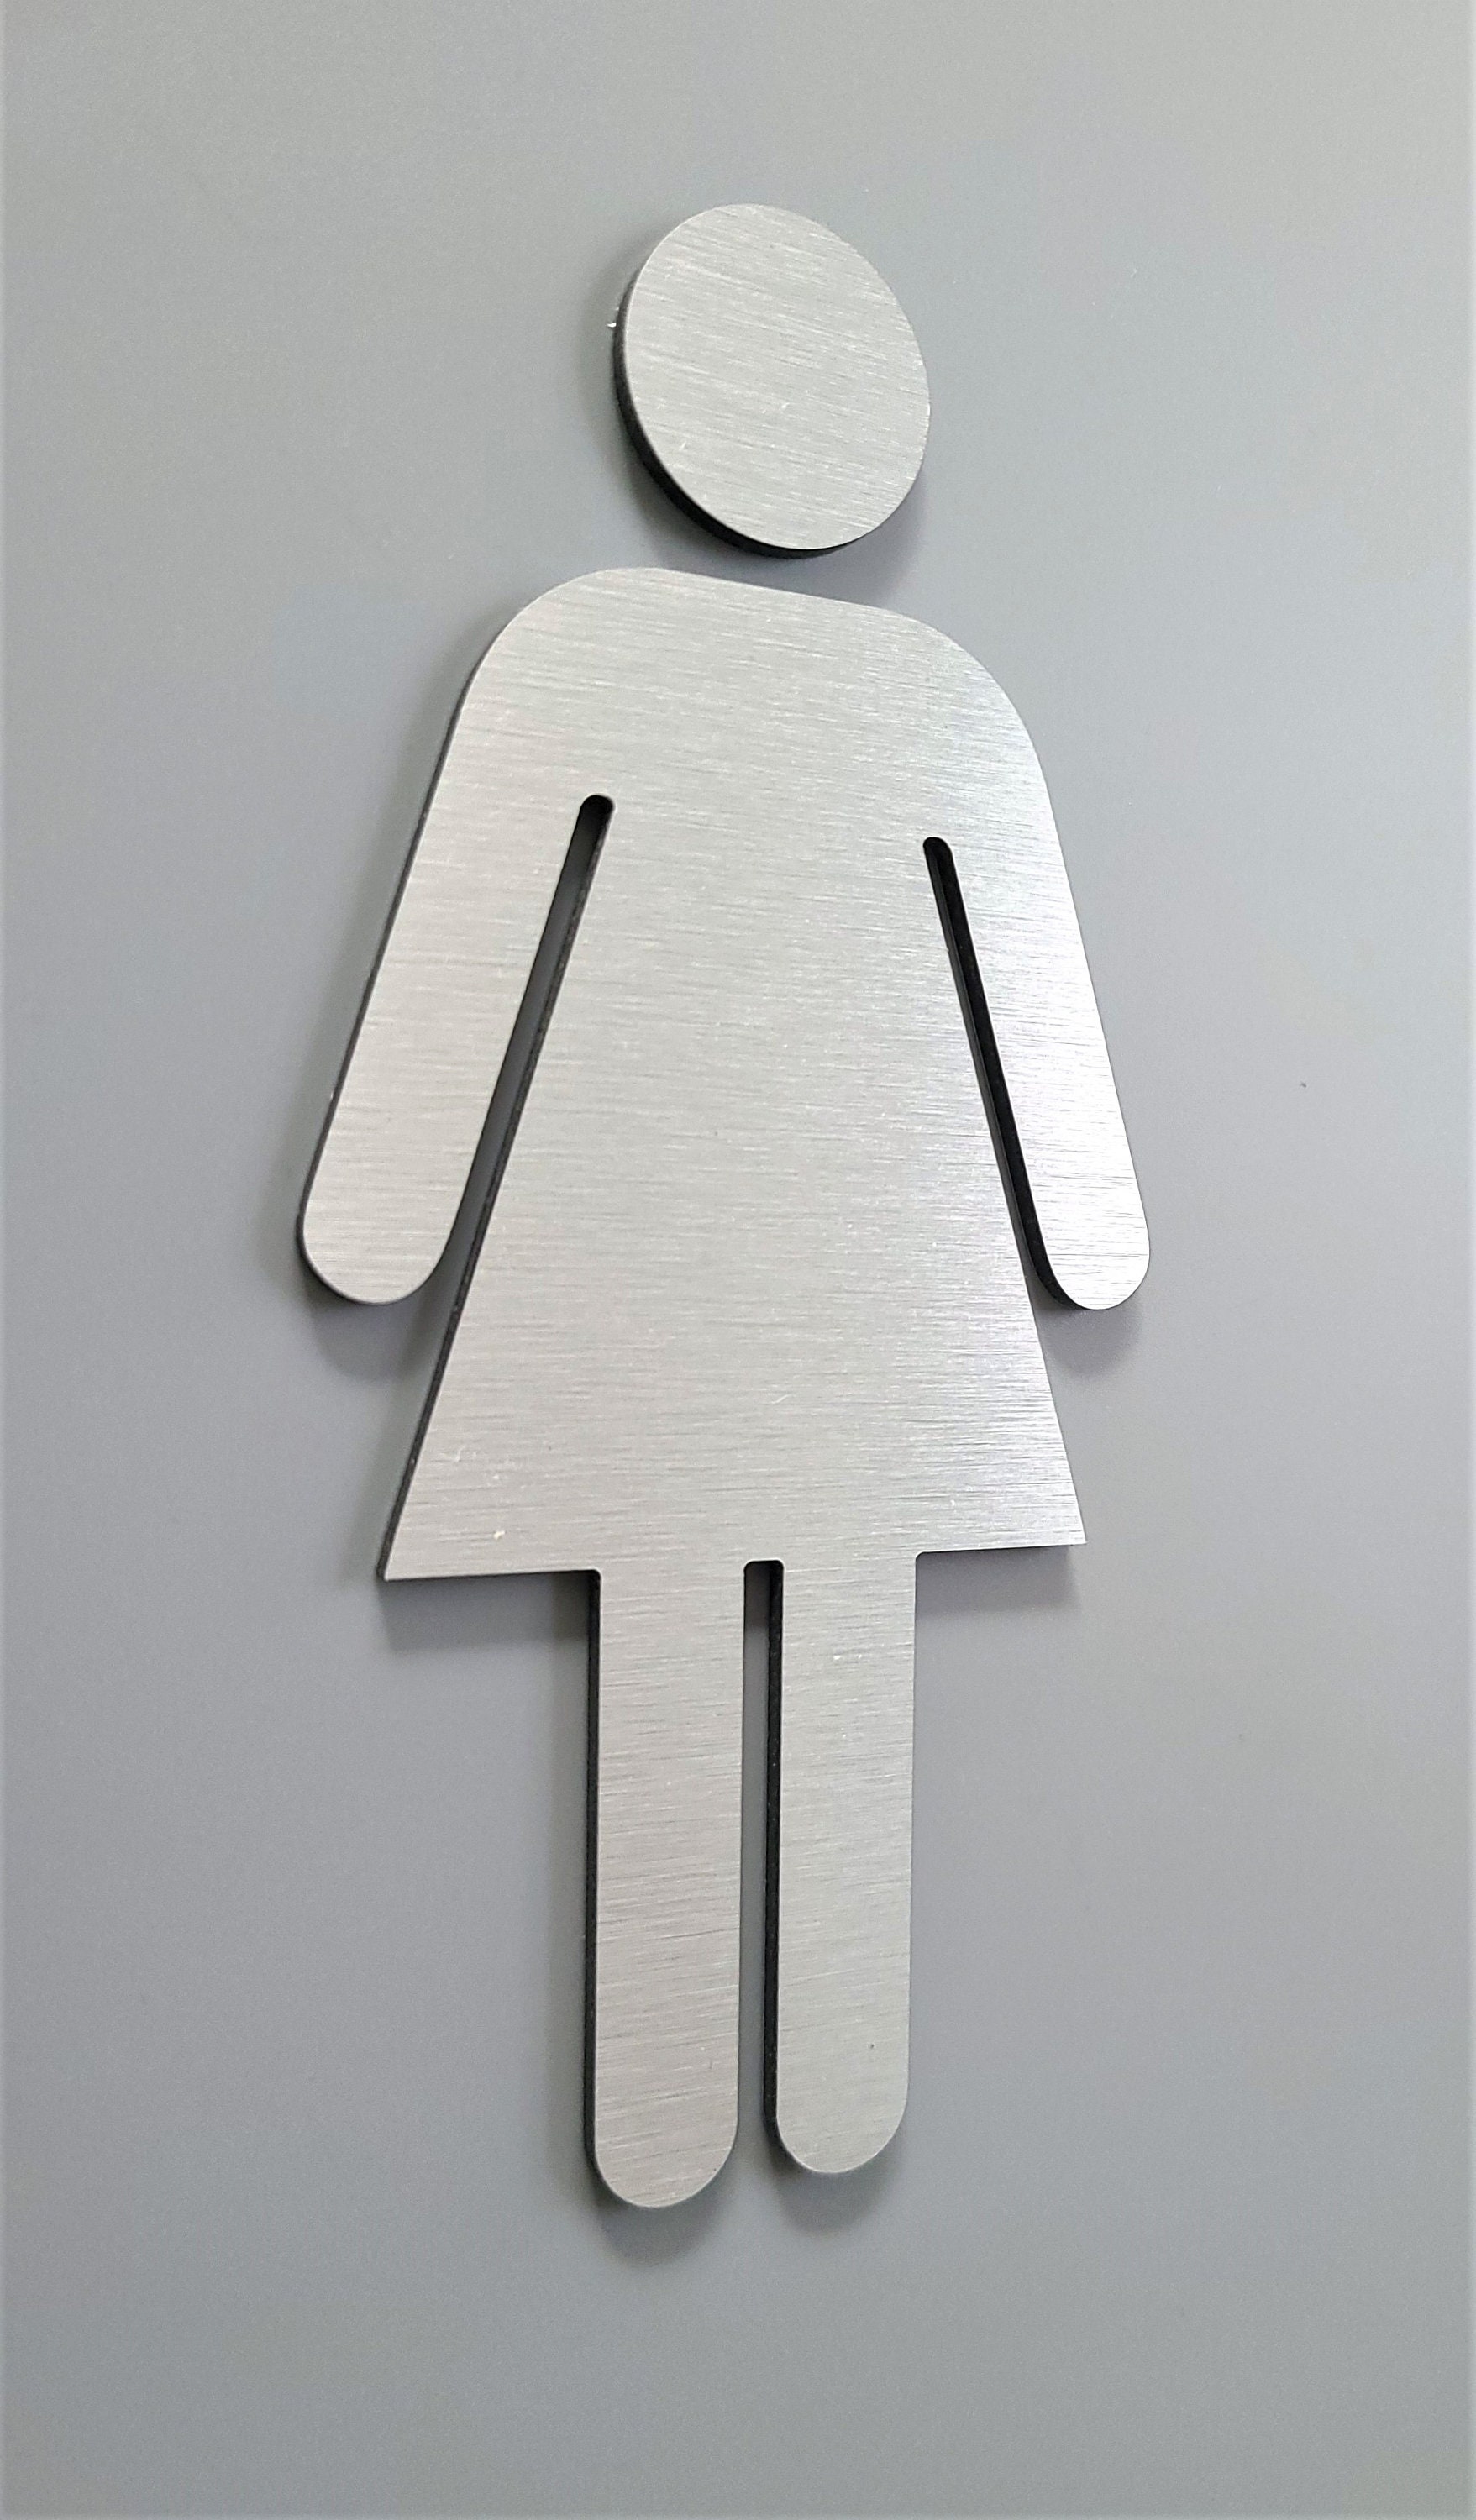 Female Figure for Bathroom Door. Fitting Room Signs. Metal Restroom People.  Modern WC Signage. Women. -  UK